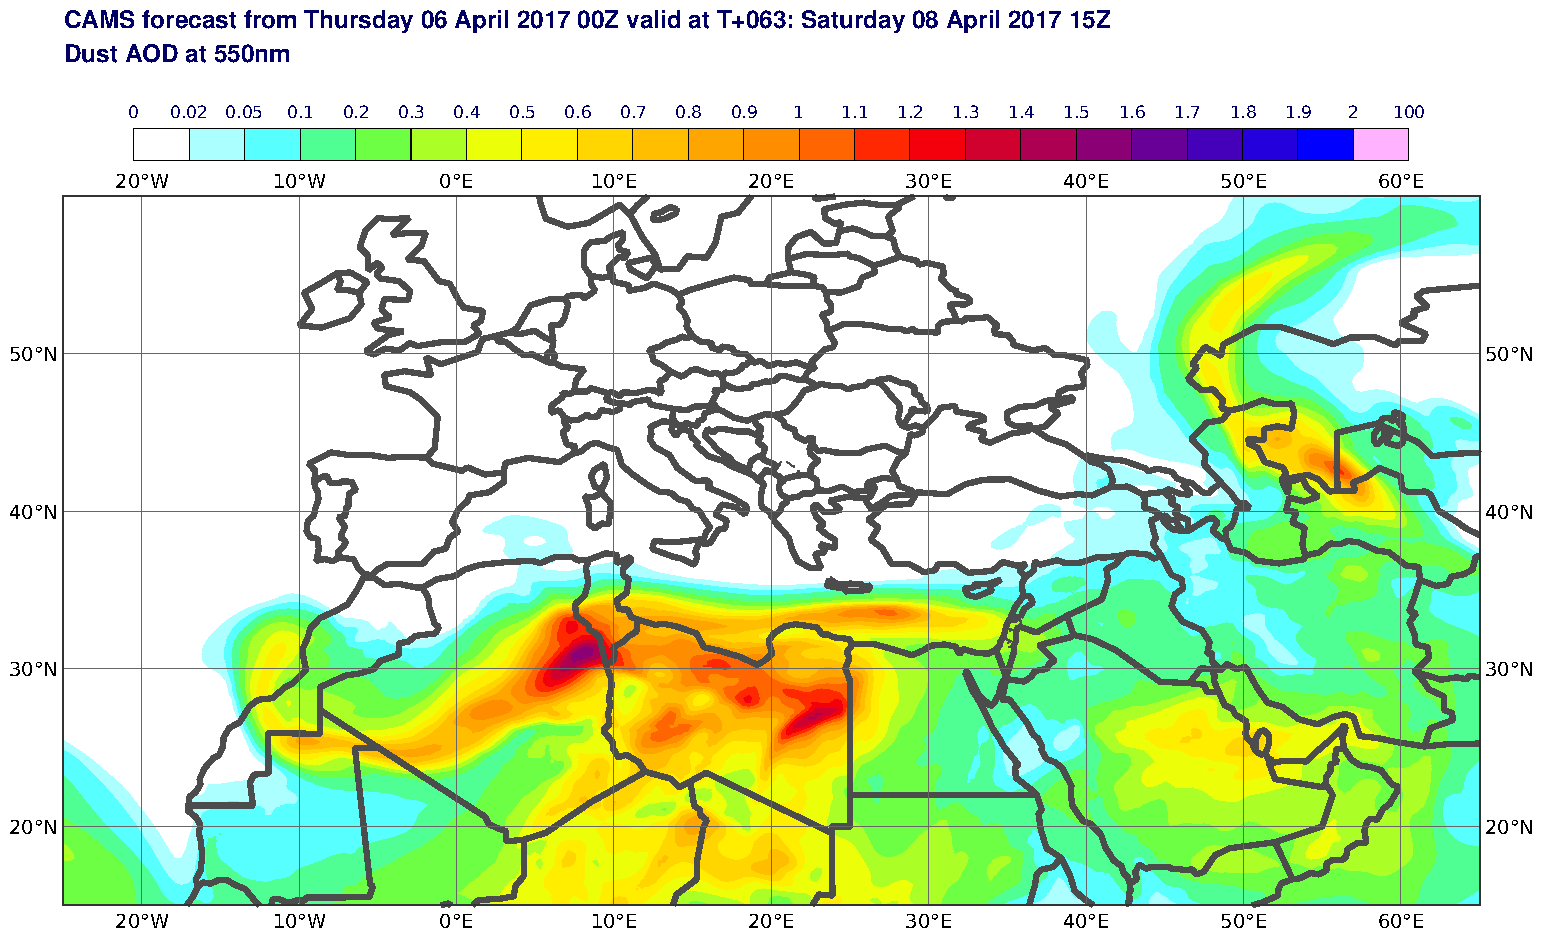 Dust AOD at 550nm valid at T63 - 2017-04-08 15:00